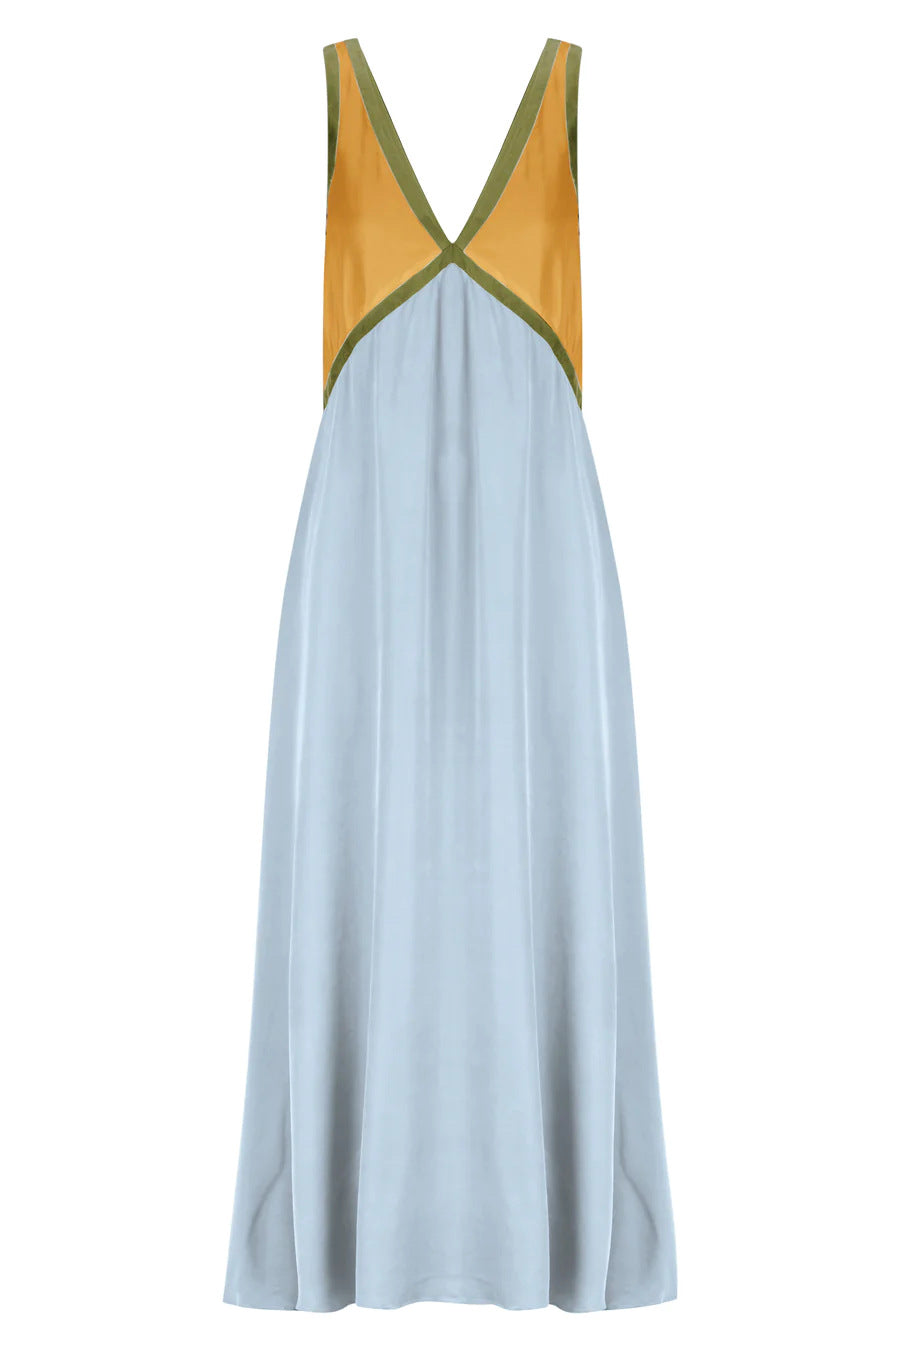 NTG Fad Dress V-neck sleeveless colorblock cupro silk swing dress